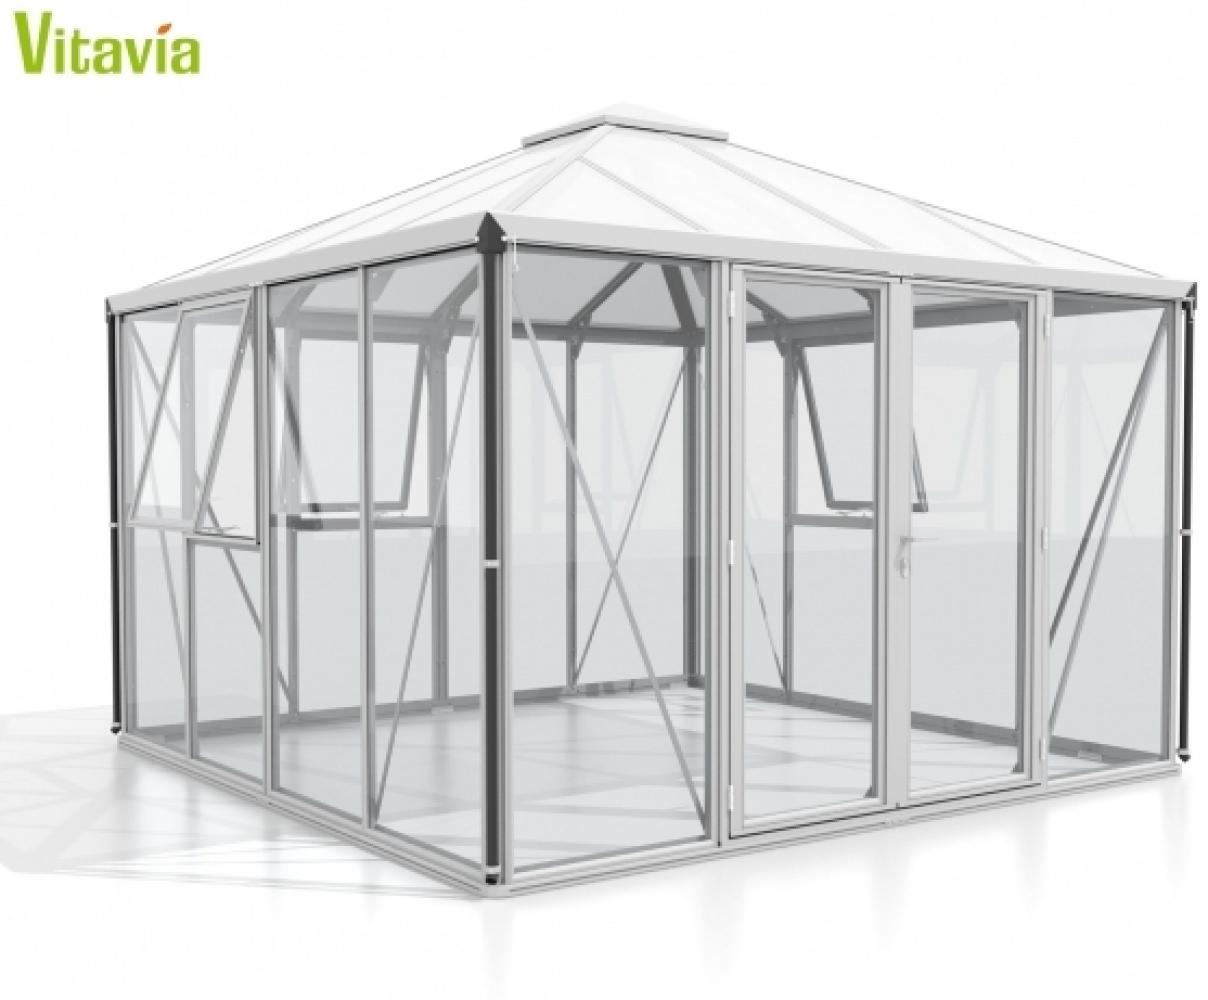 Vitavia Gewächshaus FORTUNA 3x3 mit Pavillondach ESG/HKP 10,2m² Alu eloxiert Bild 1